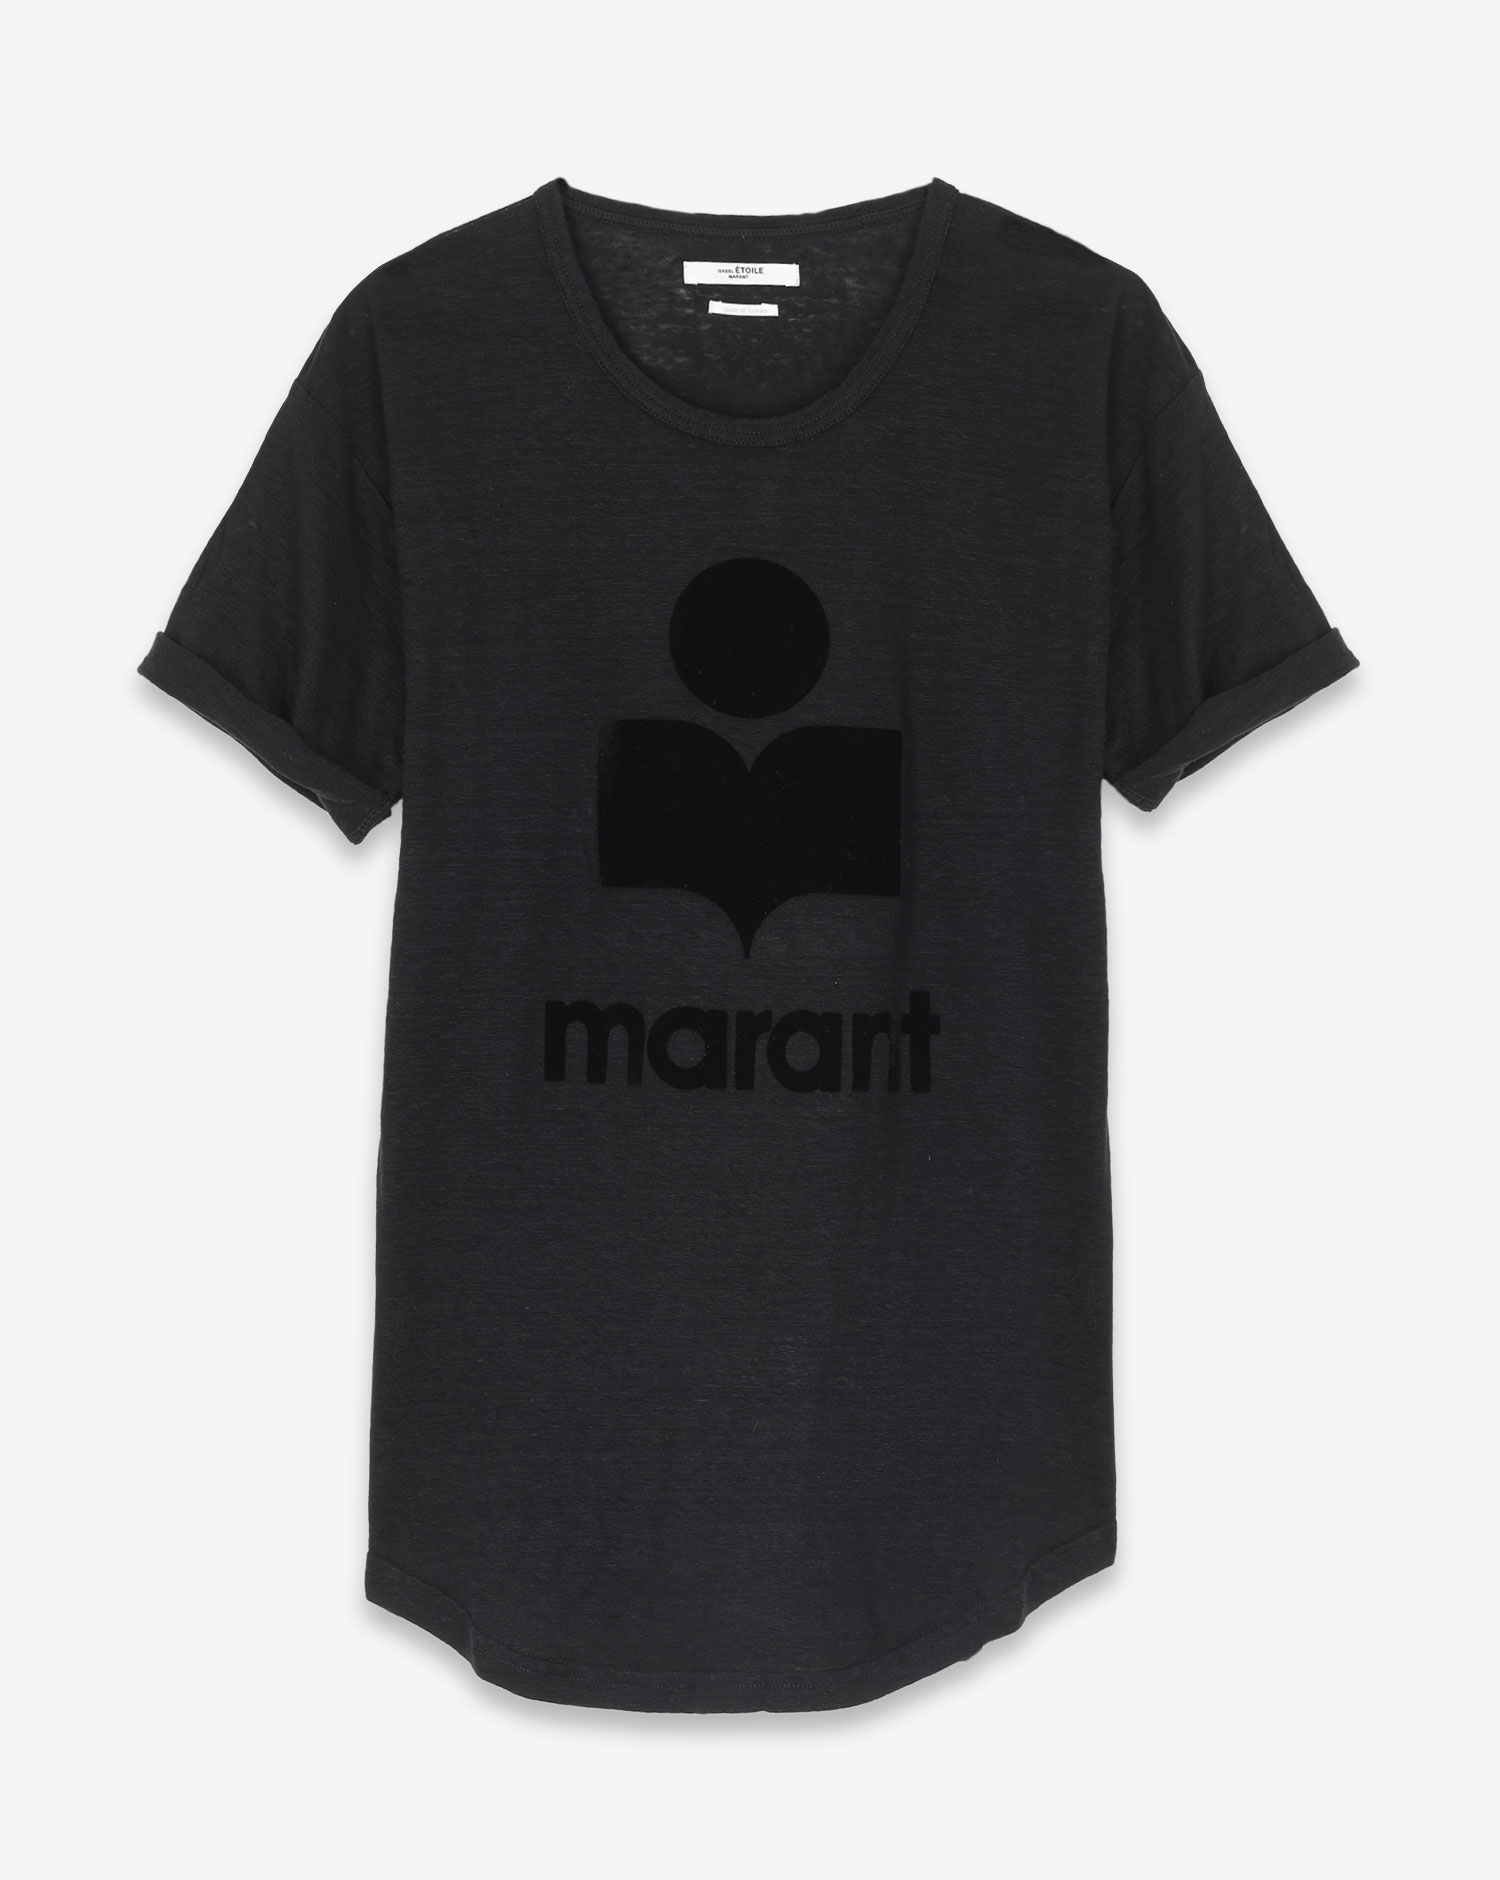 tee-shirt en lin noir logo velours noir ton sur ton Koldi Isabel Marant Etoile. 